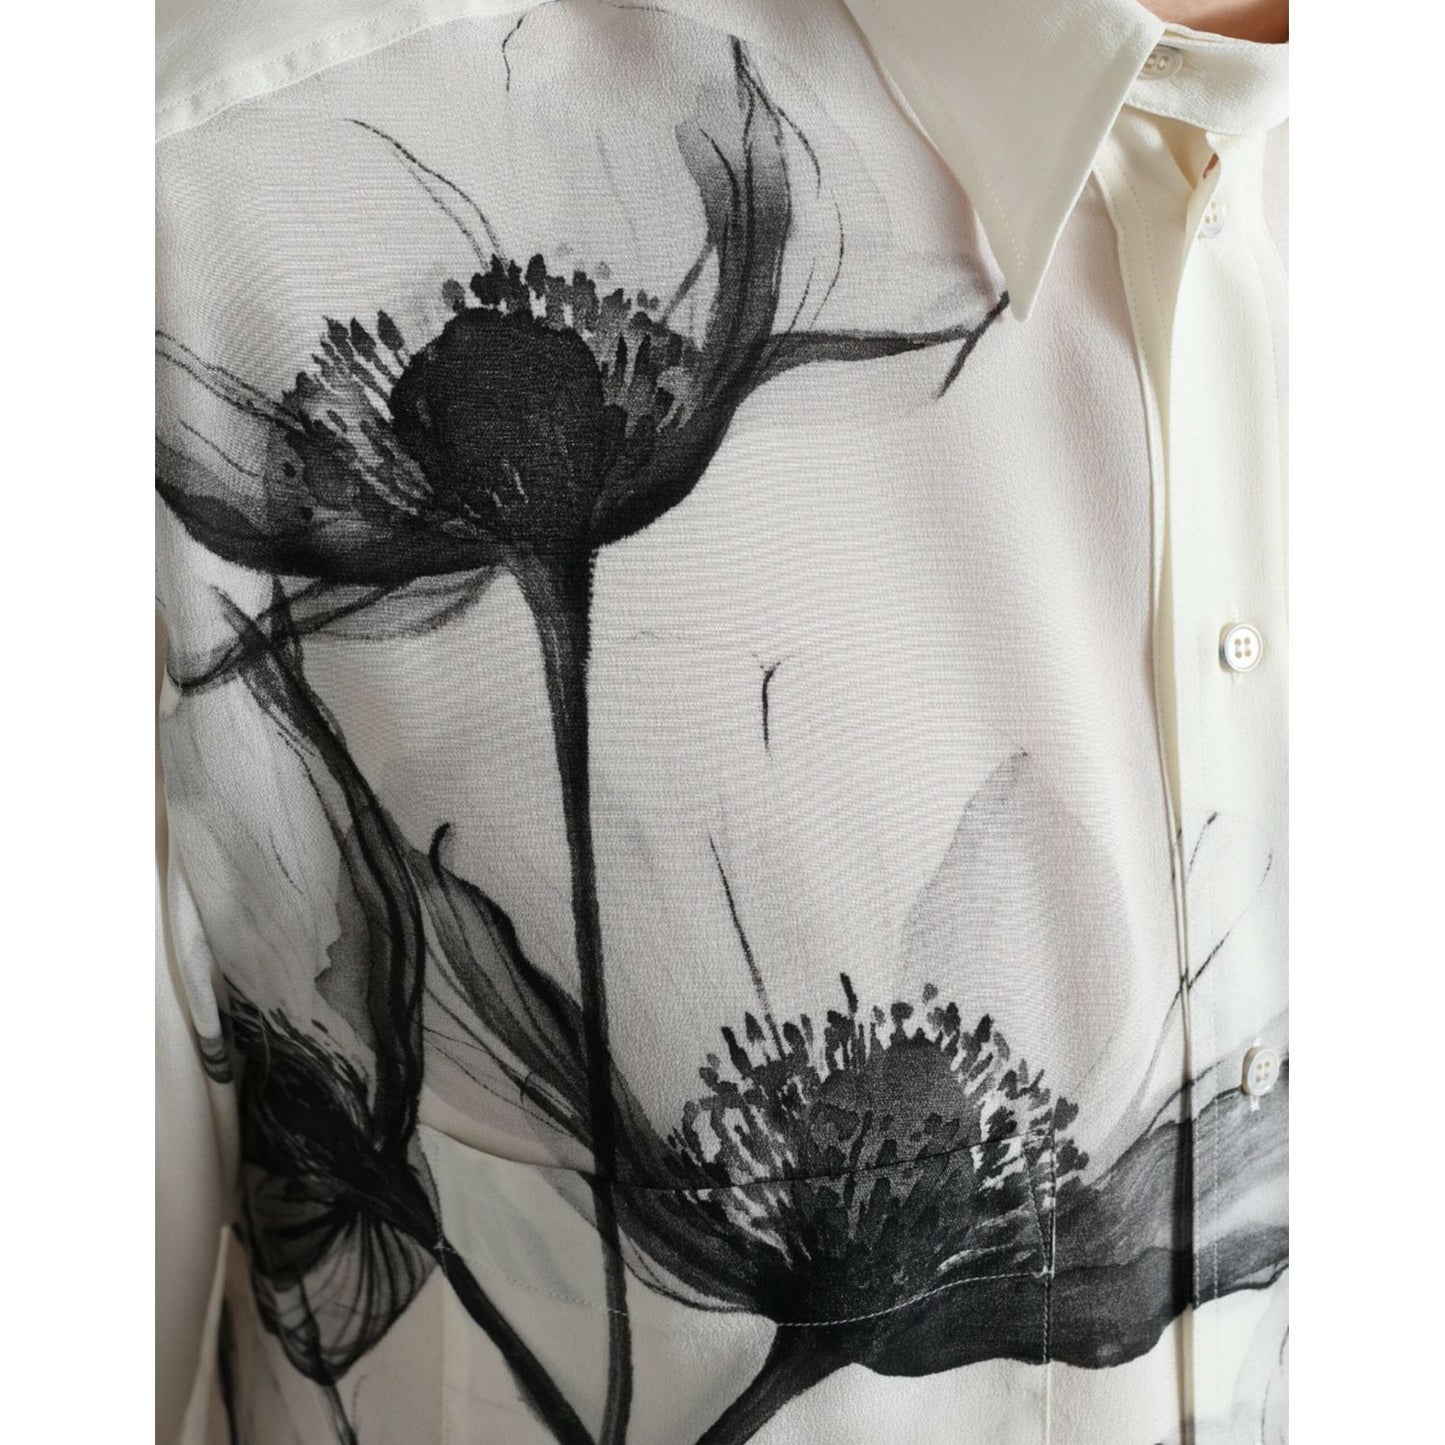 Dolce & Gabbana Elegant Floral Silk Dress Shirt white-floral-collared-dress-silk-shirt